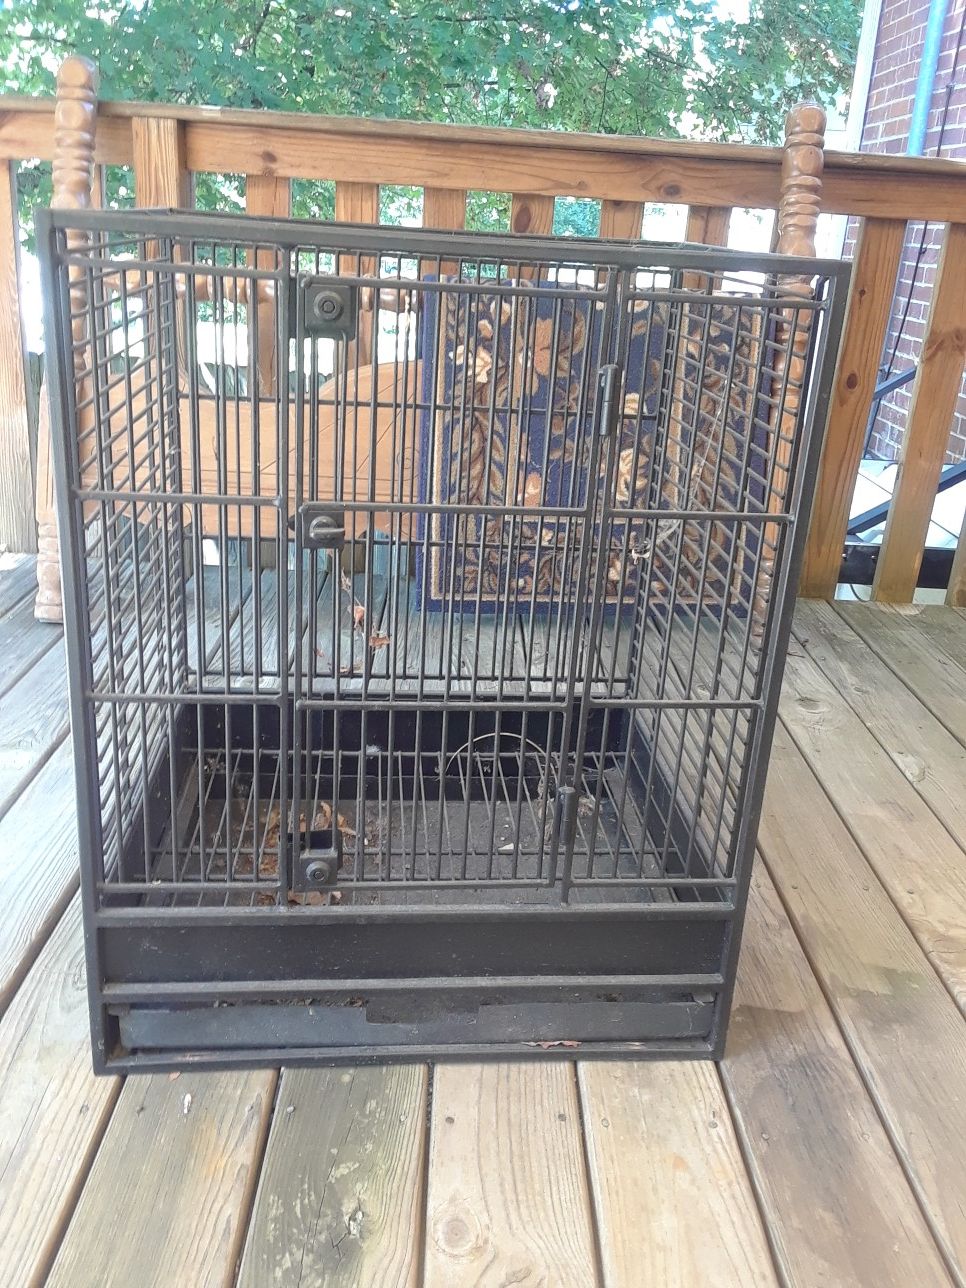 Heavy duty bird cage in excellent condition